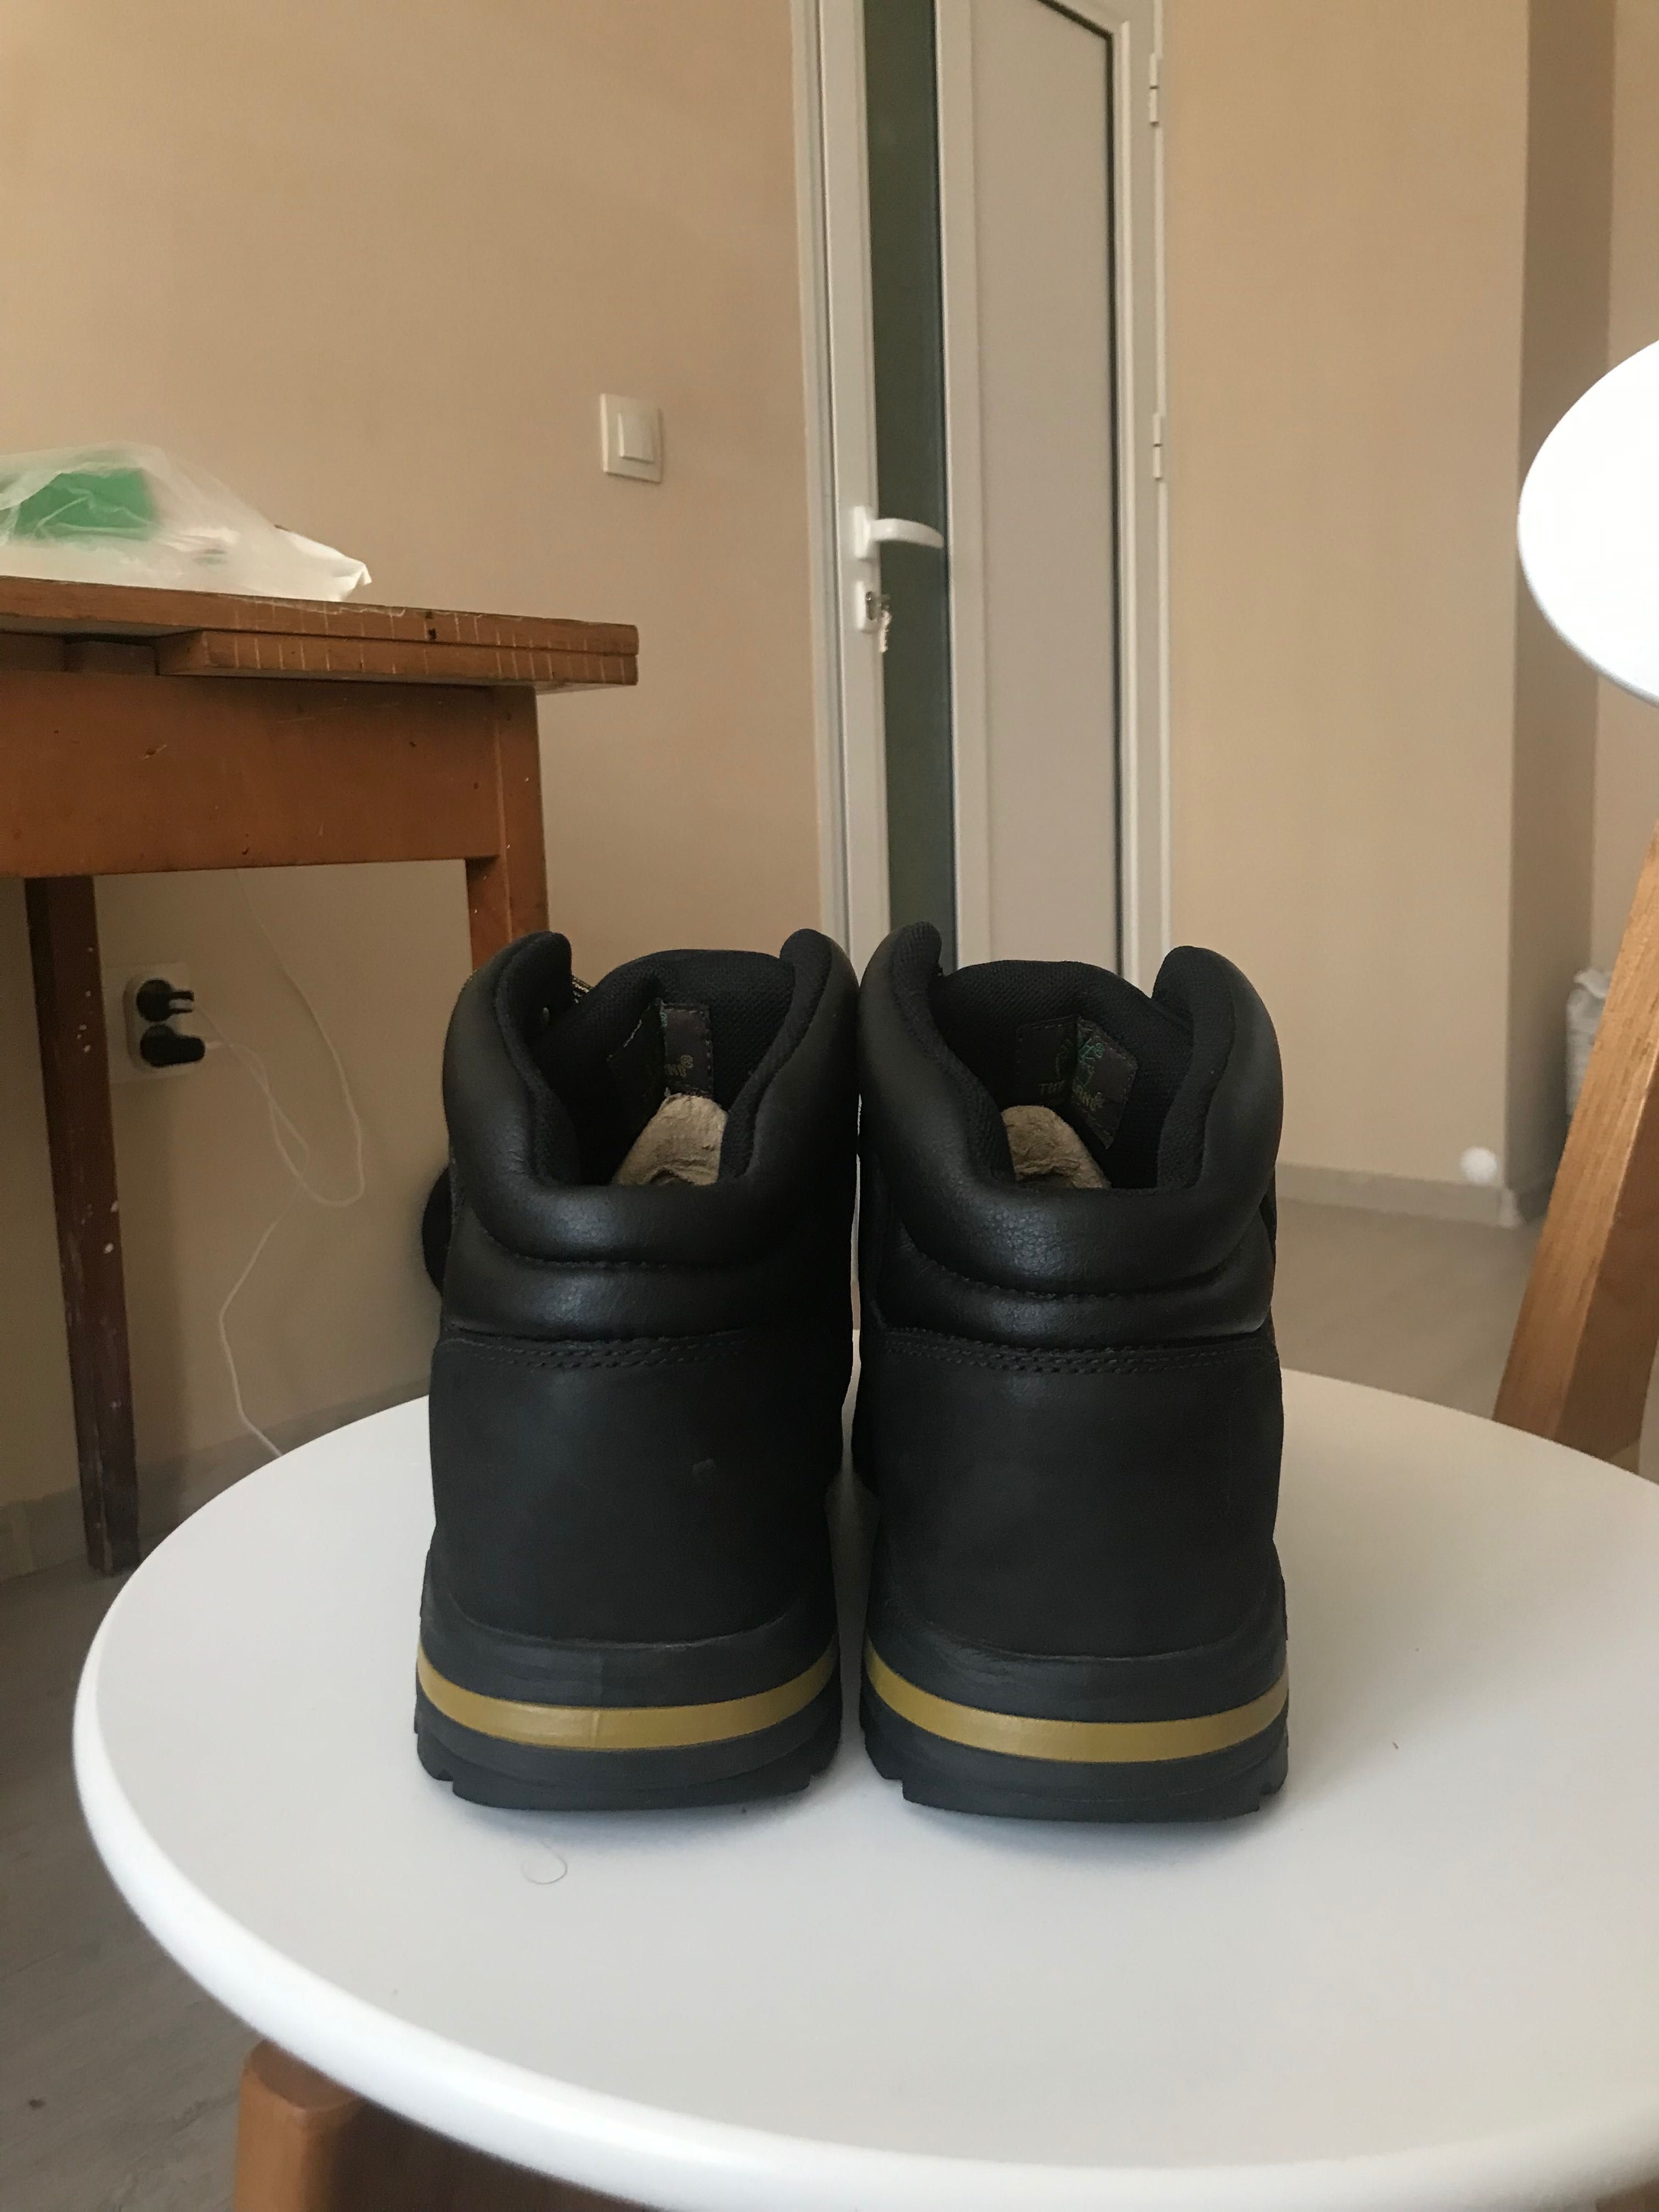 Зимни обувки Timberland, черни със златисто